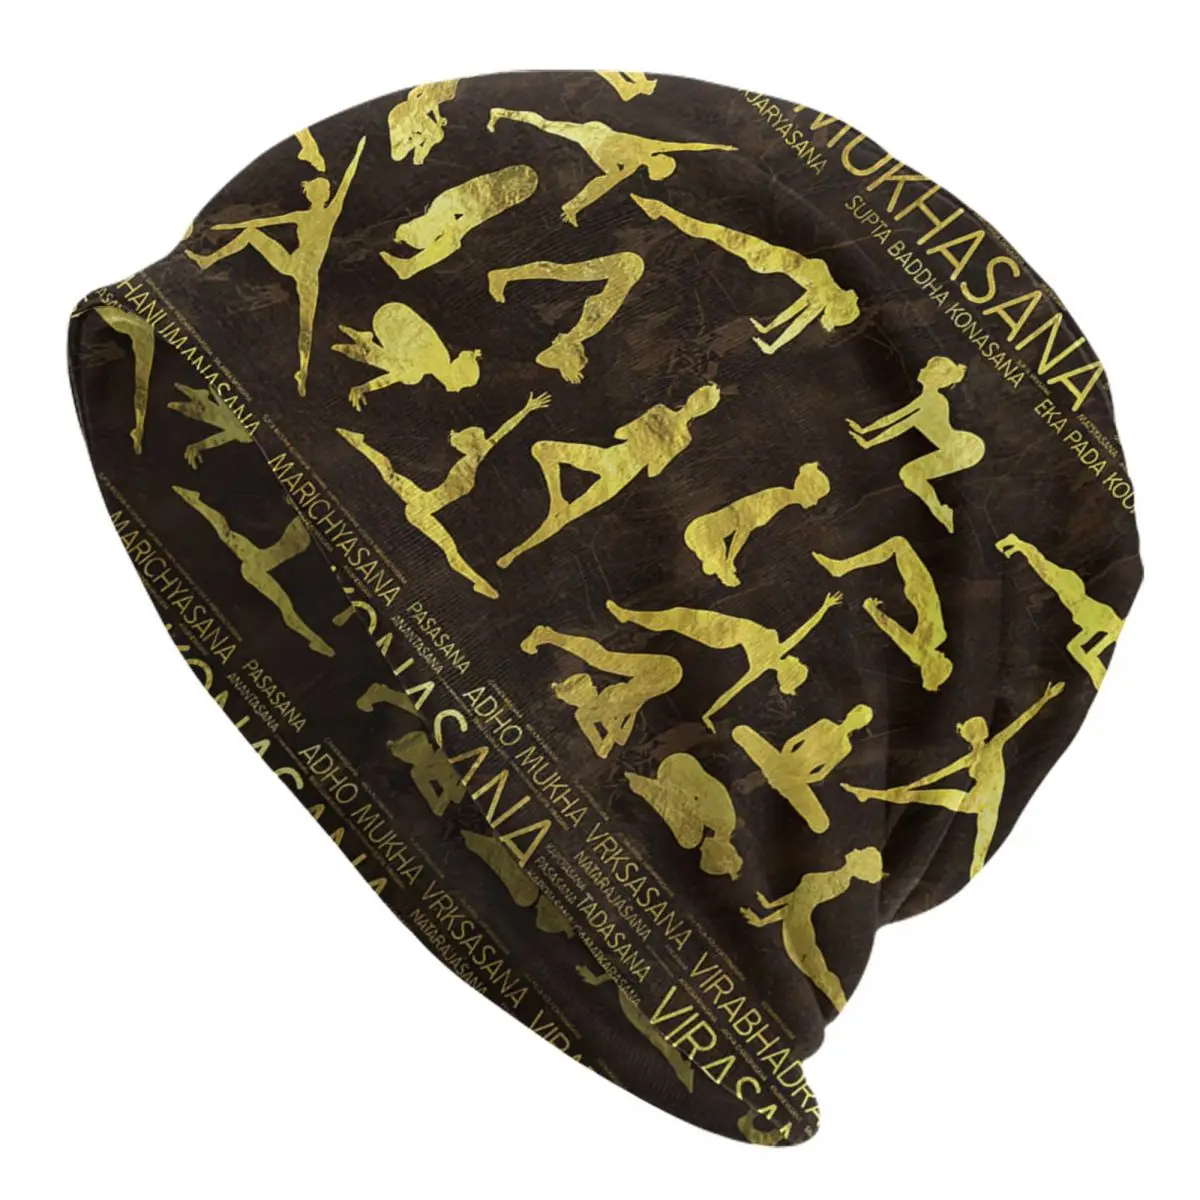 Gold Yoga Asanas,Poses Sanskrit Word Art Adult Men's Women's Knit Hat Keep warm winter Funny knitted hat